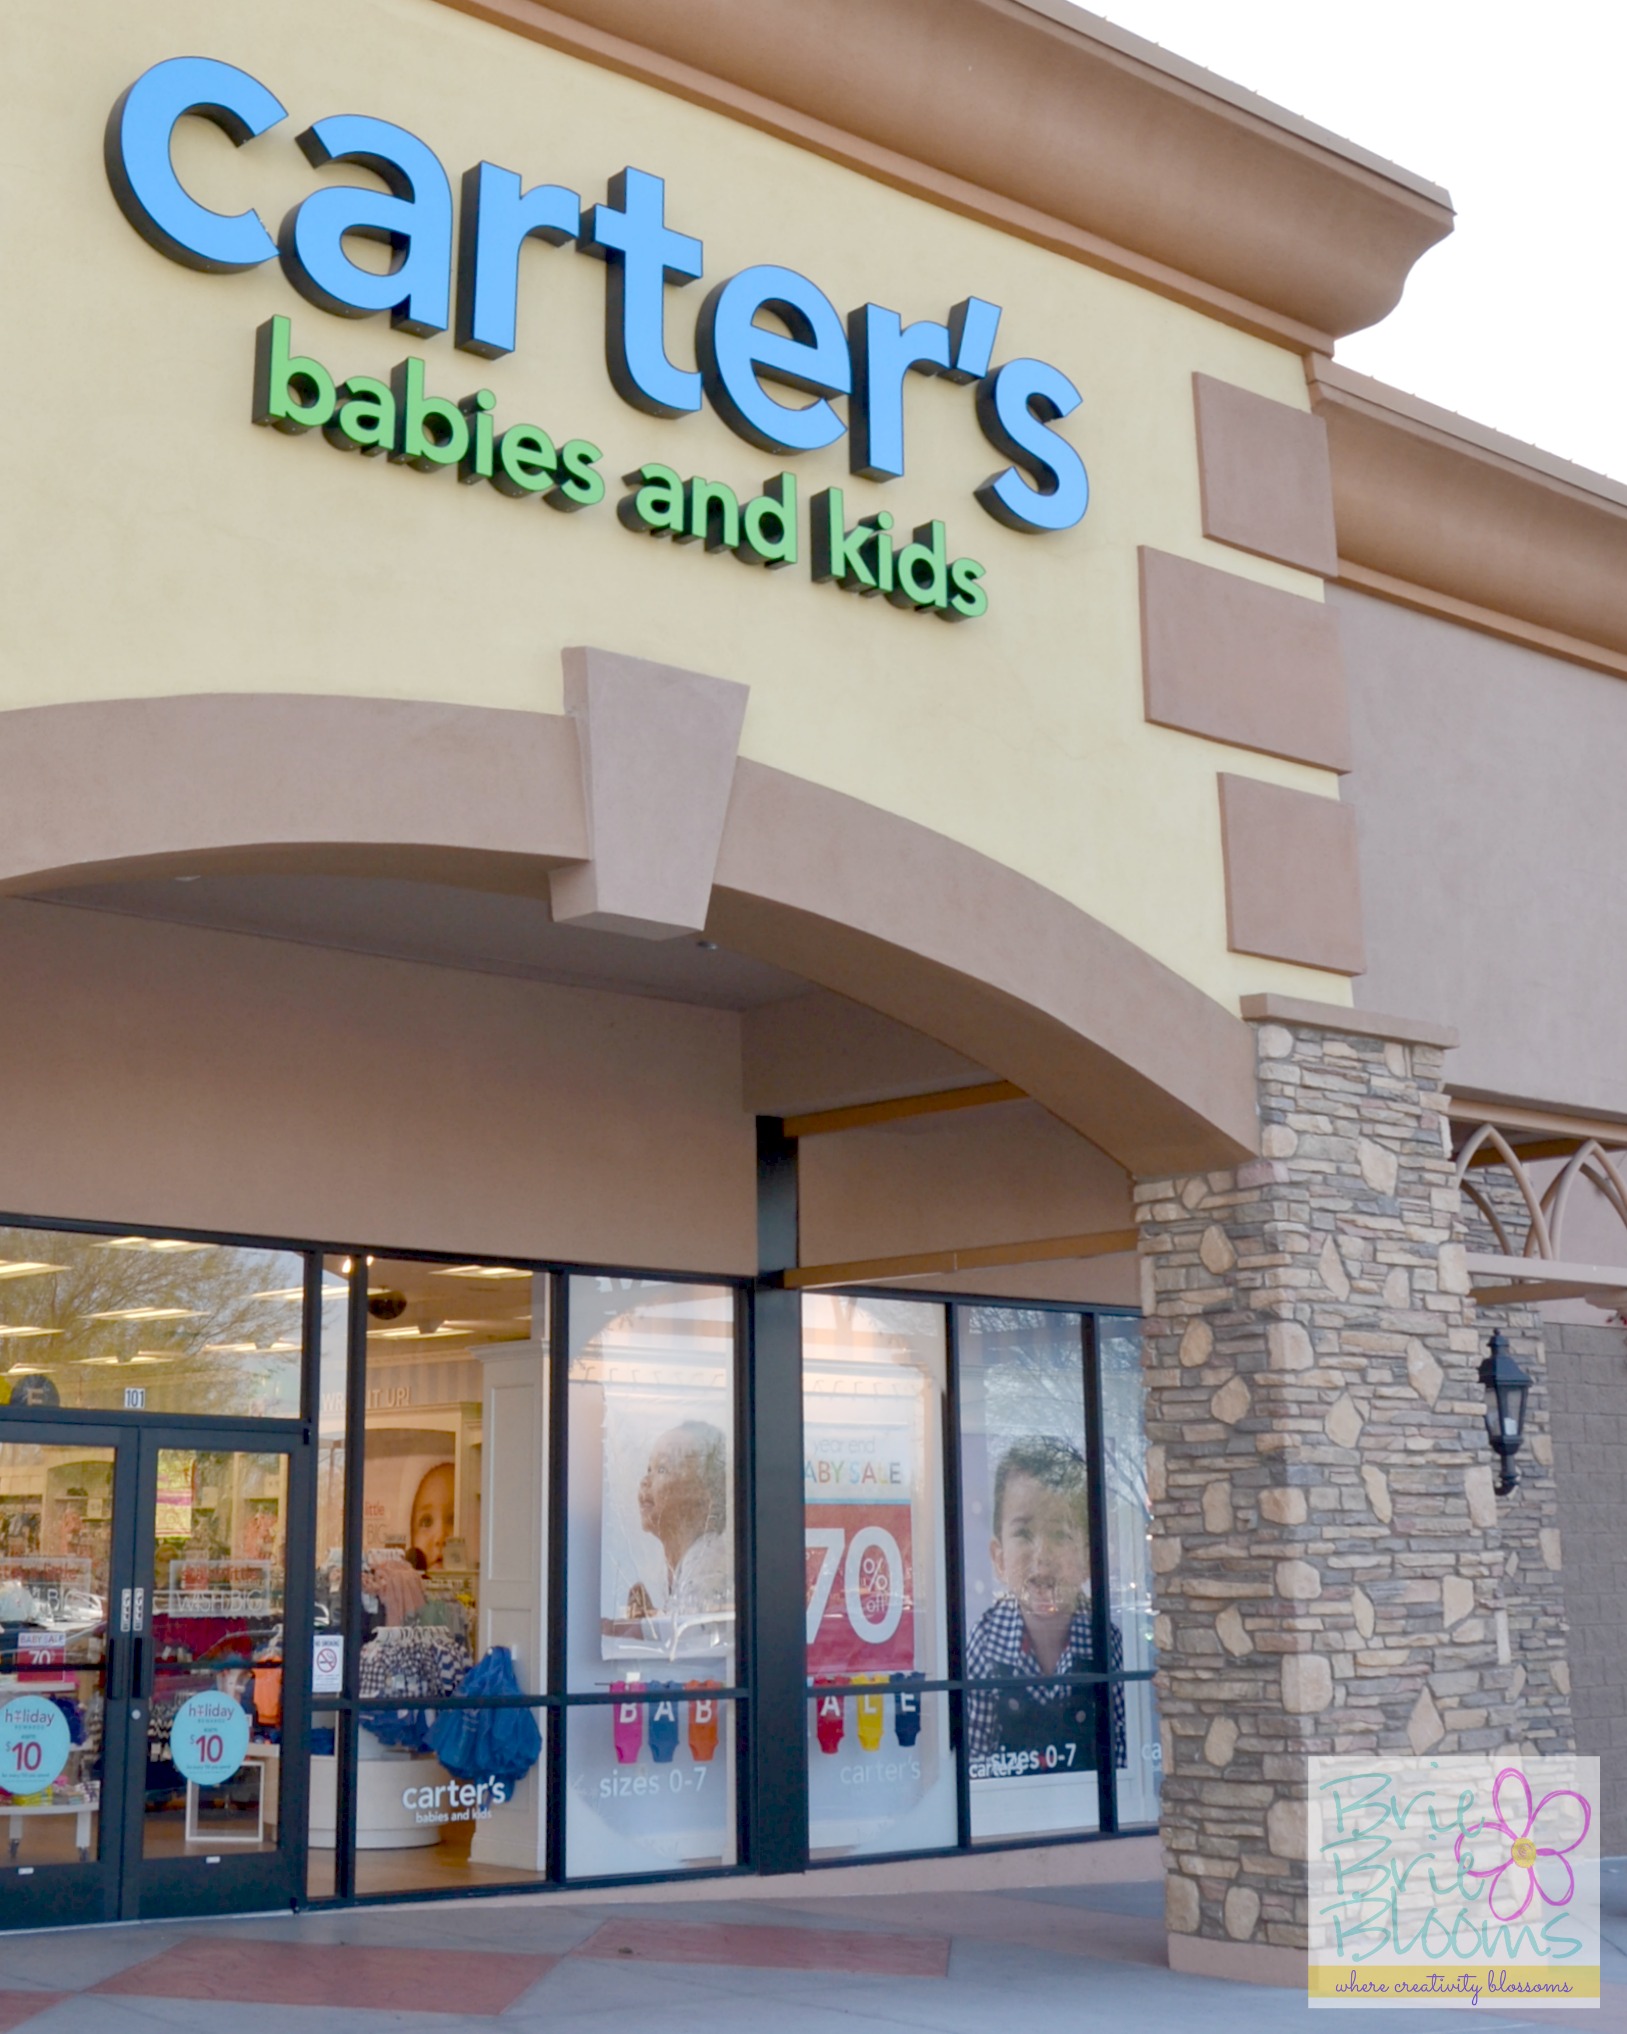 Carter's store #CartersFam #sponsored #MC